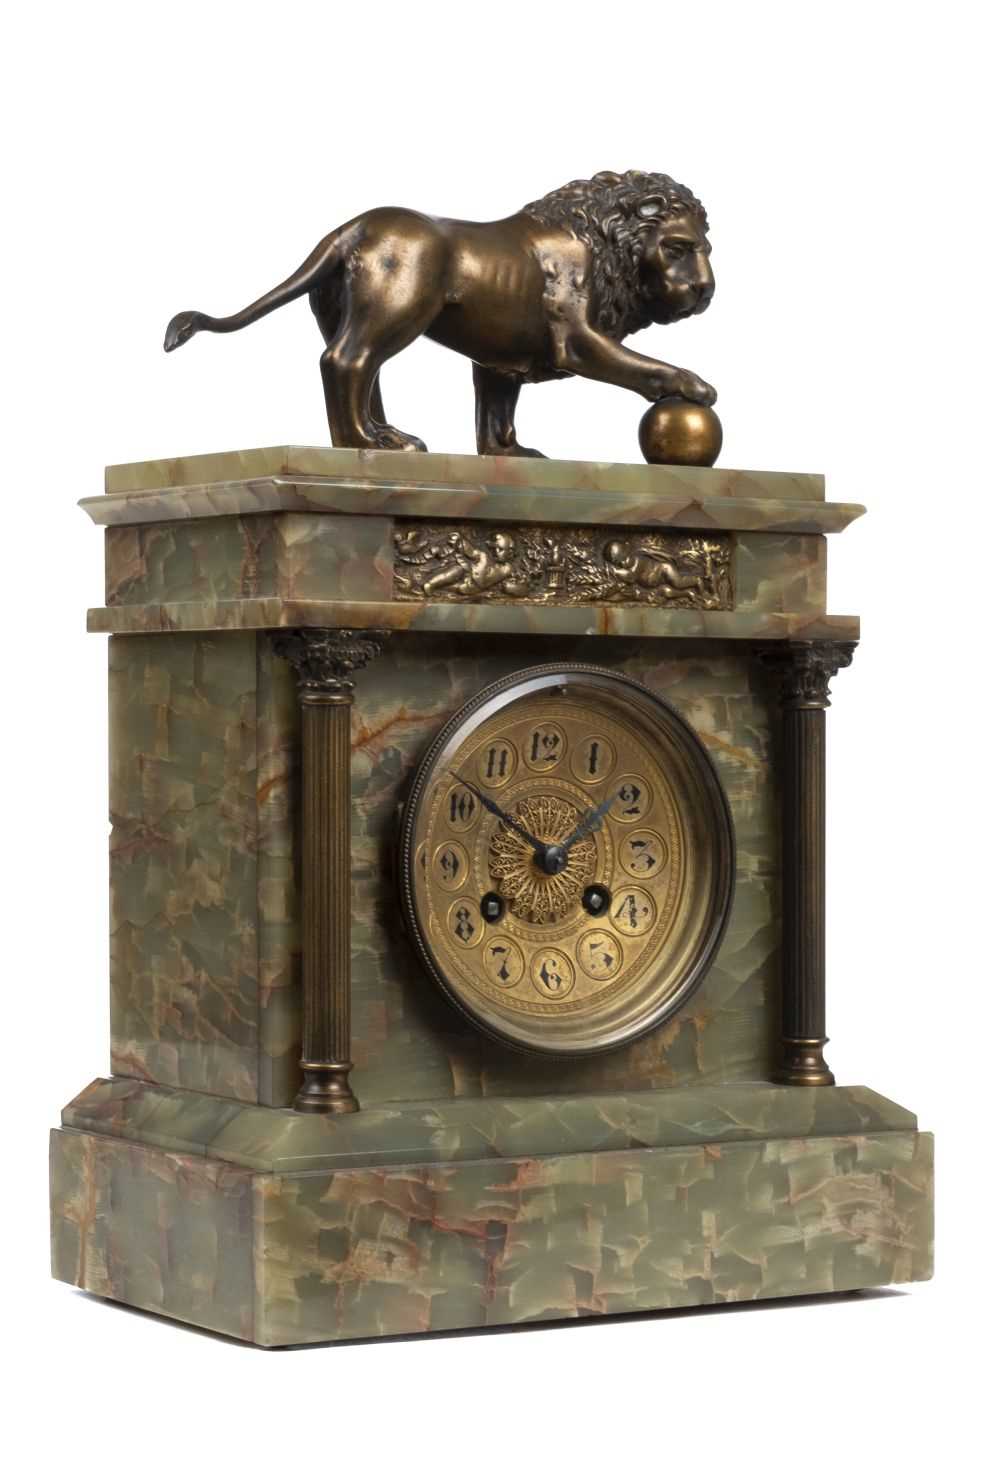 Lot 45 - Clock. A French onyx mantel clock circa 1900